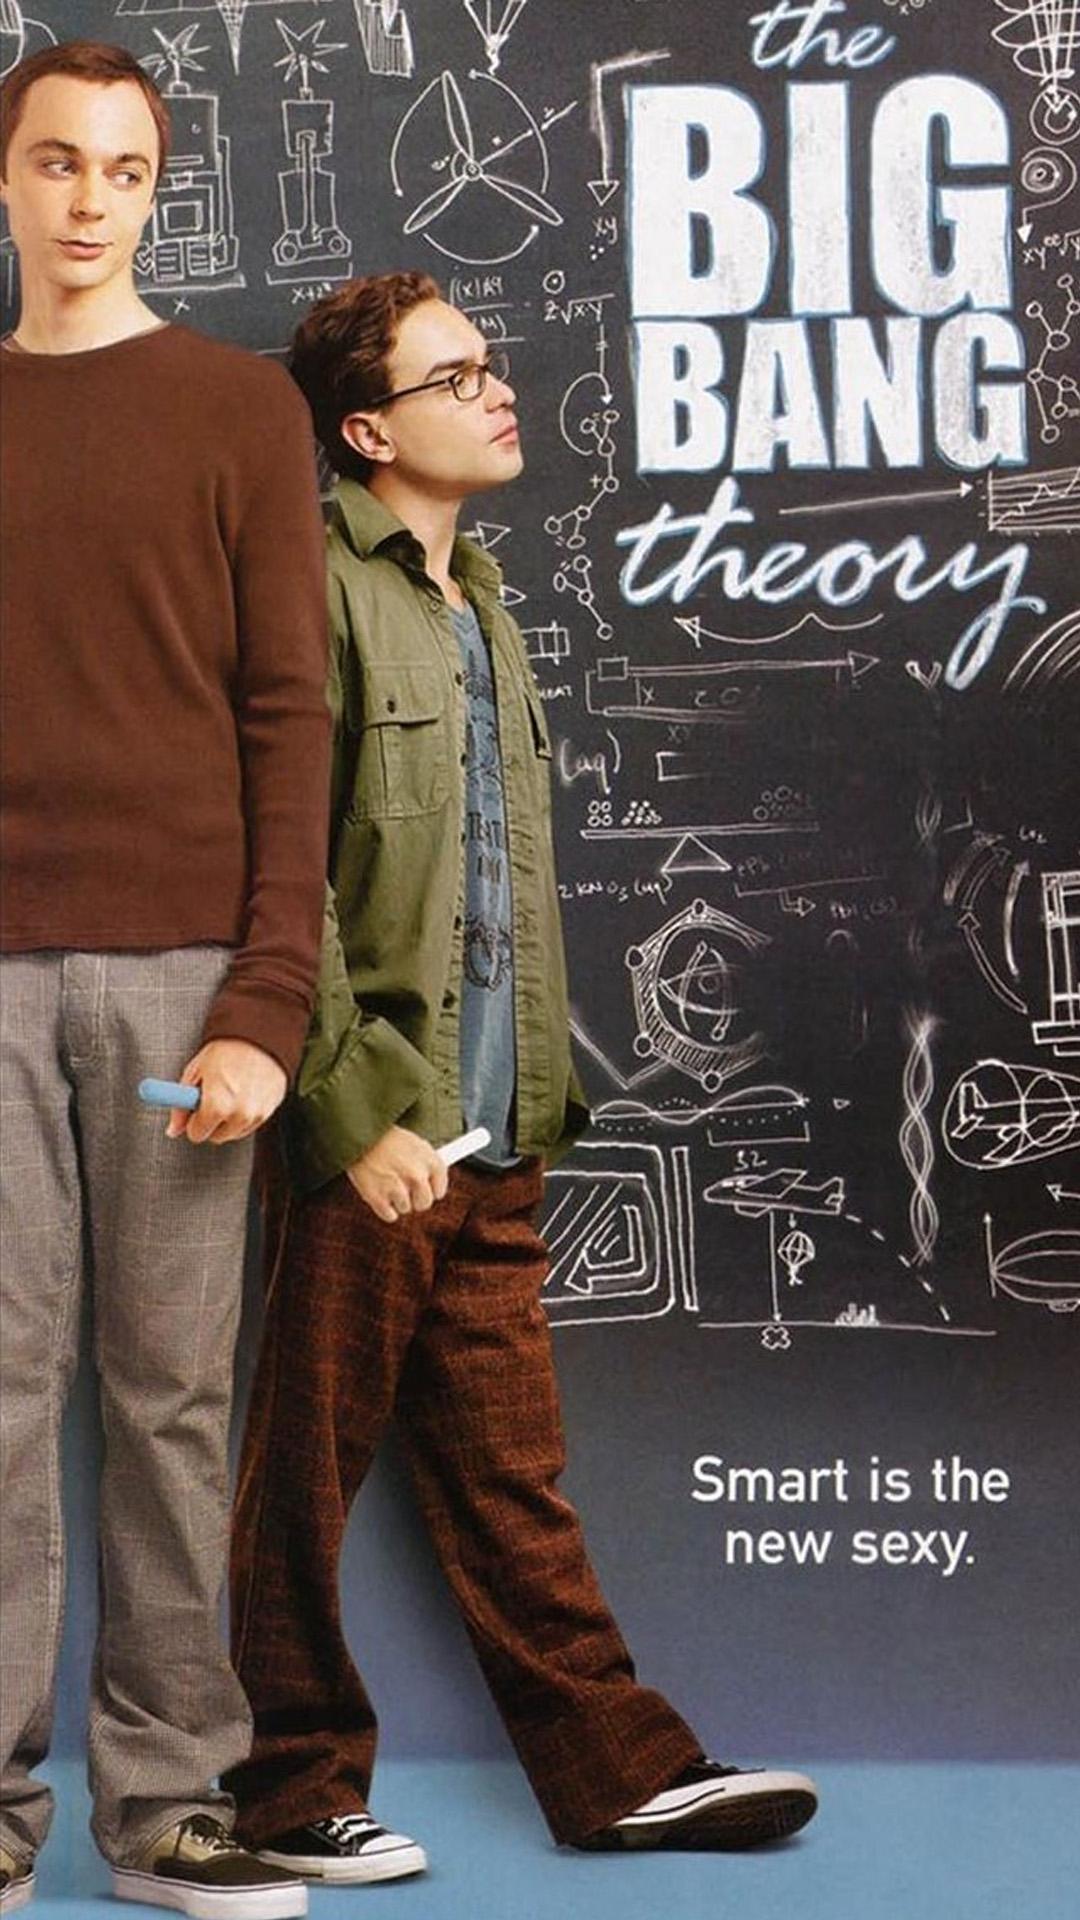 Big Bang Theory for iPhone